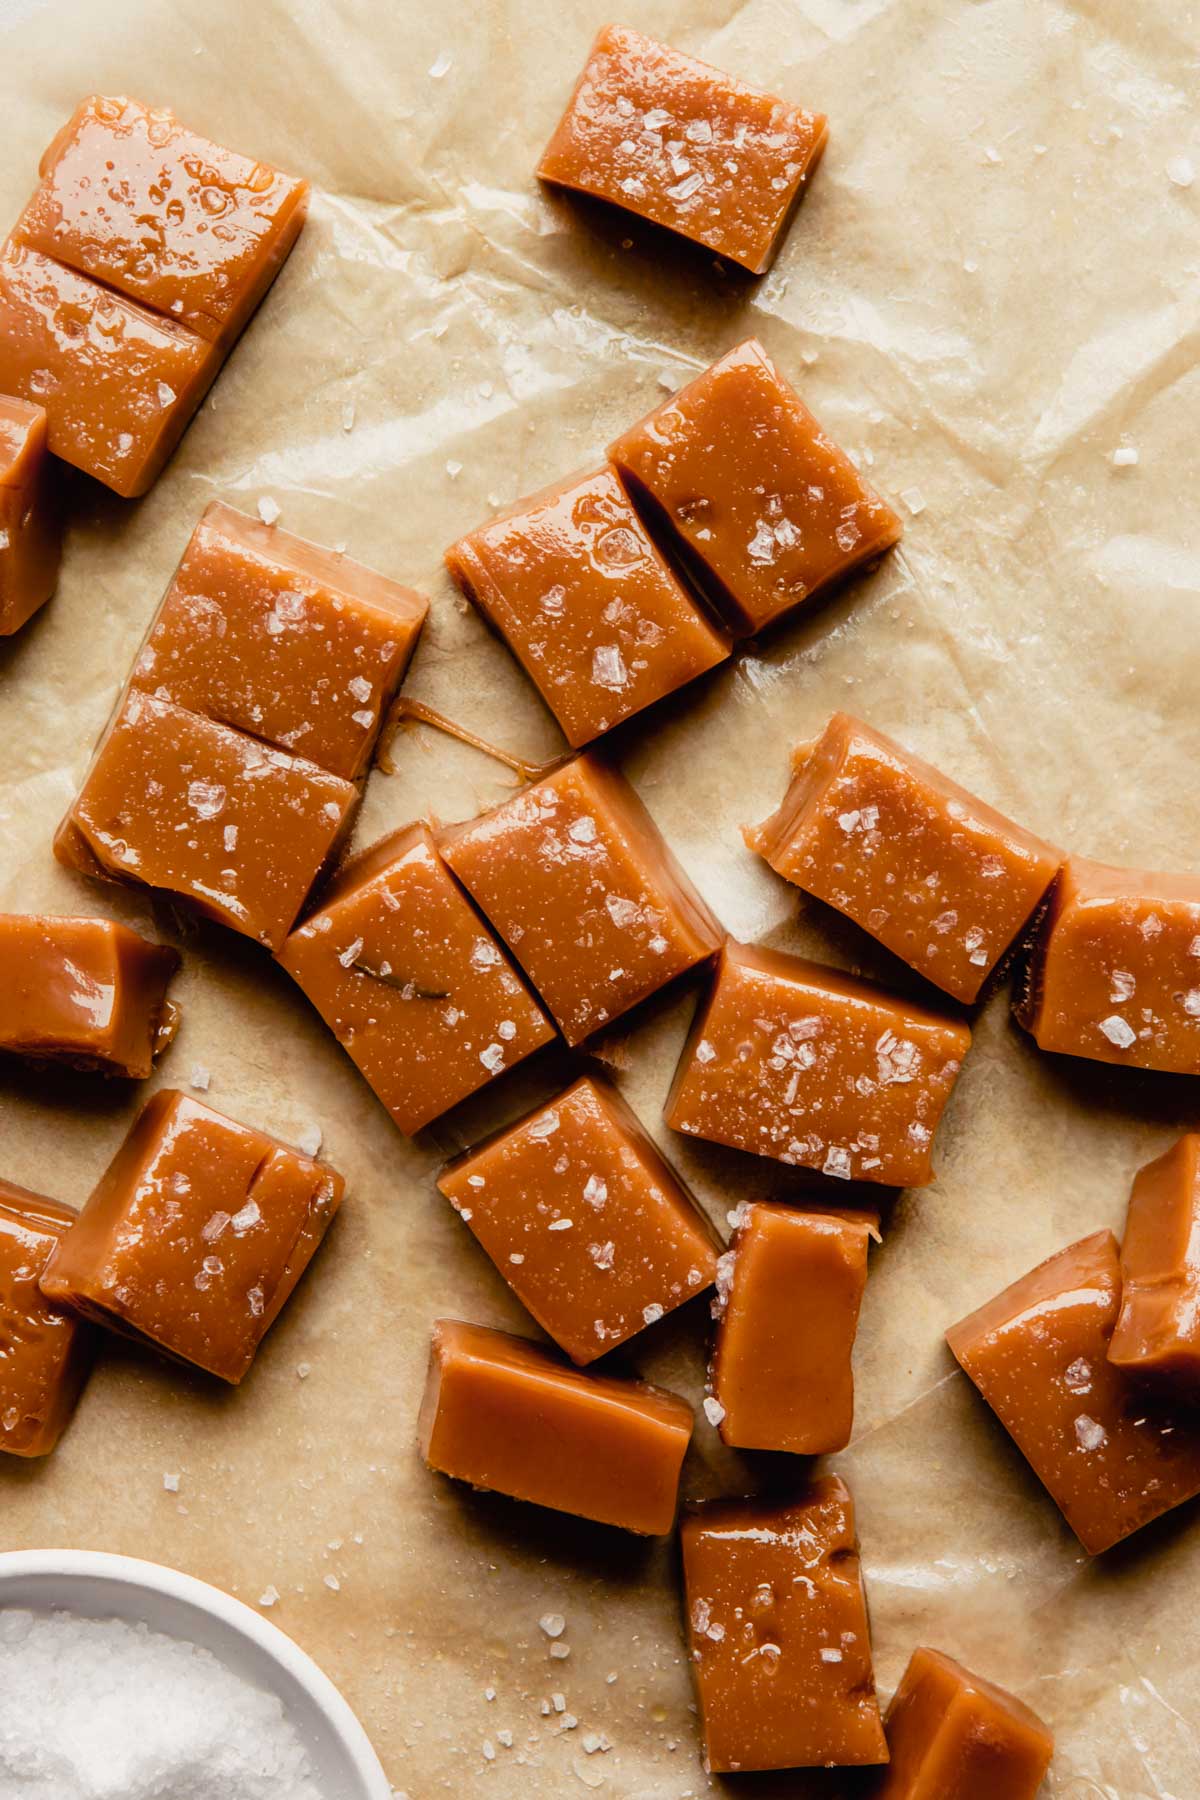 https://zestfulkitchen.com/wp-content/uploads/2020/10/rosemary-sea-salt-caramels-%E2%80%94-for-the-web-4.jpg